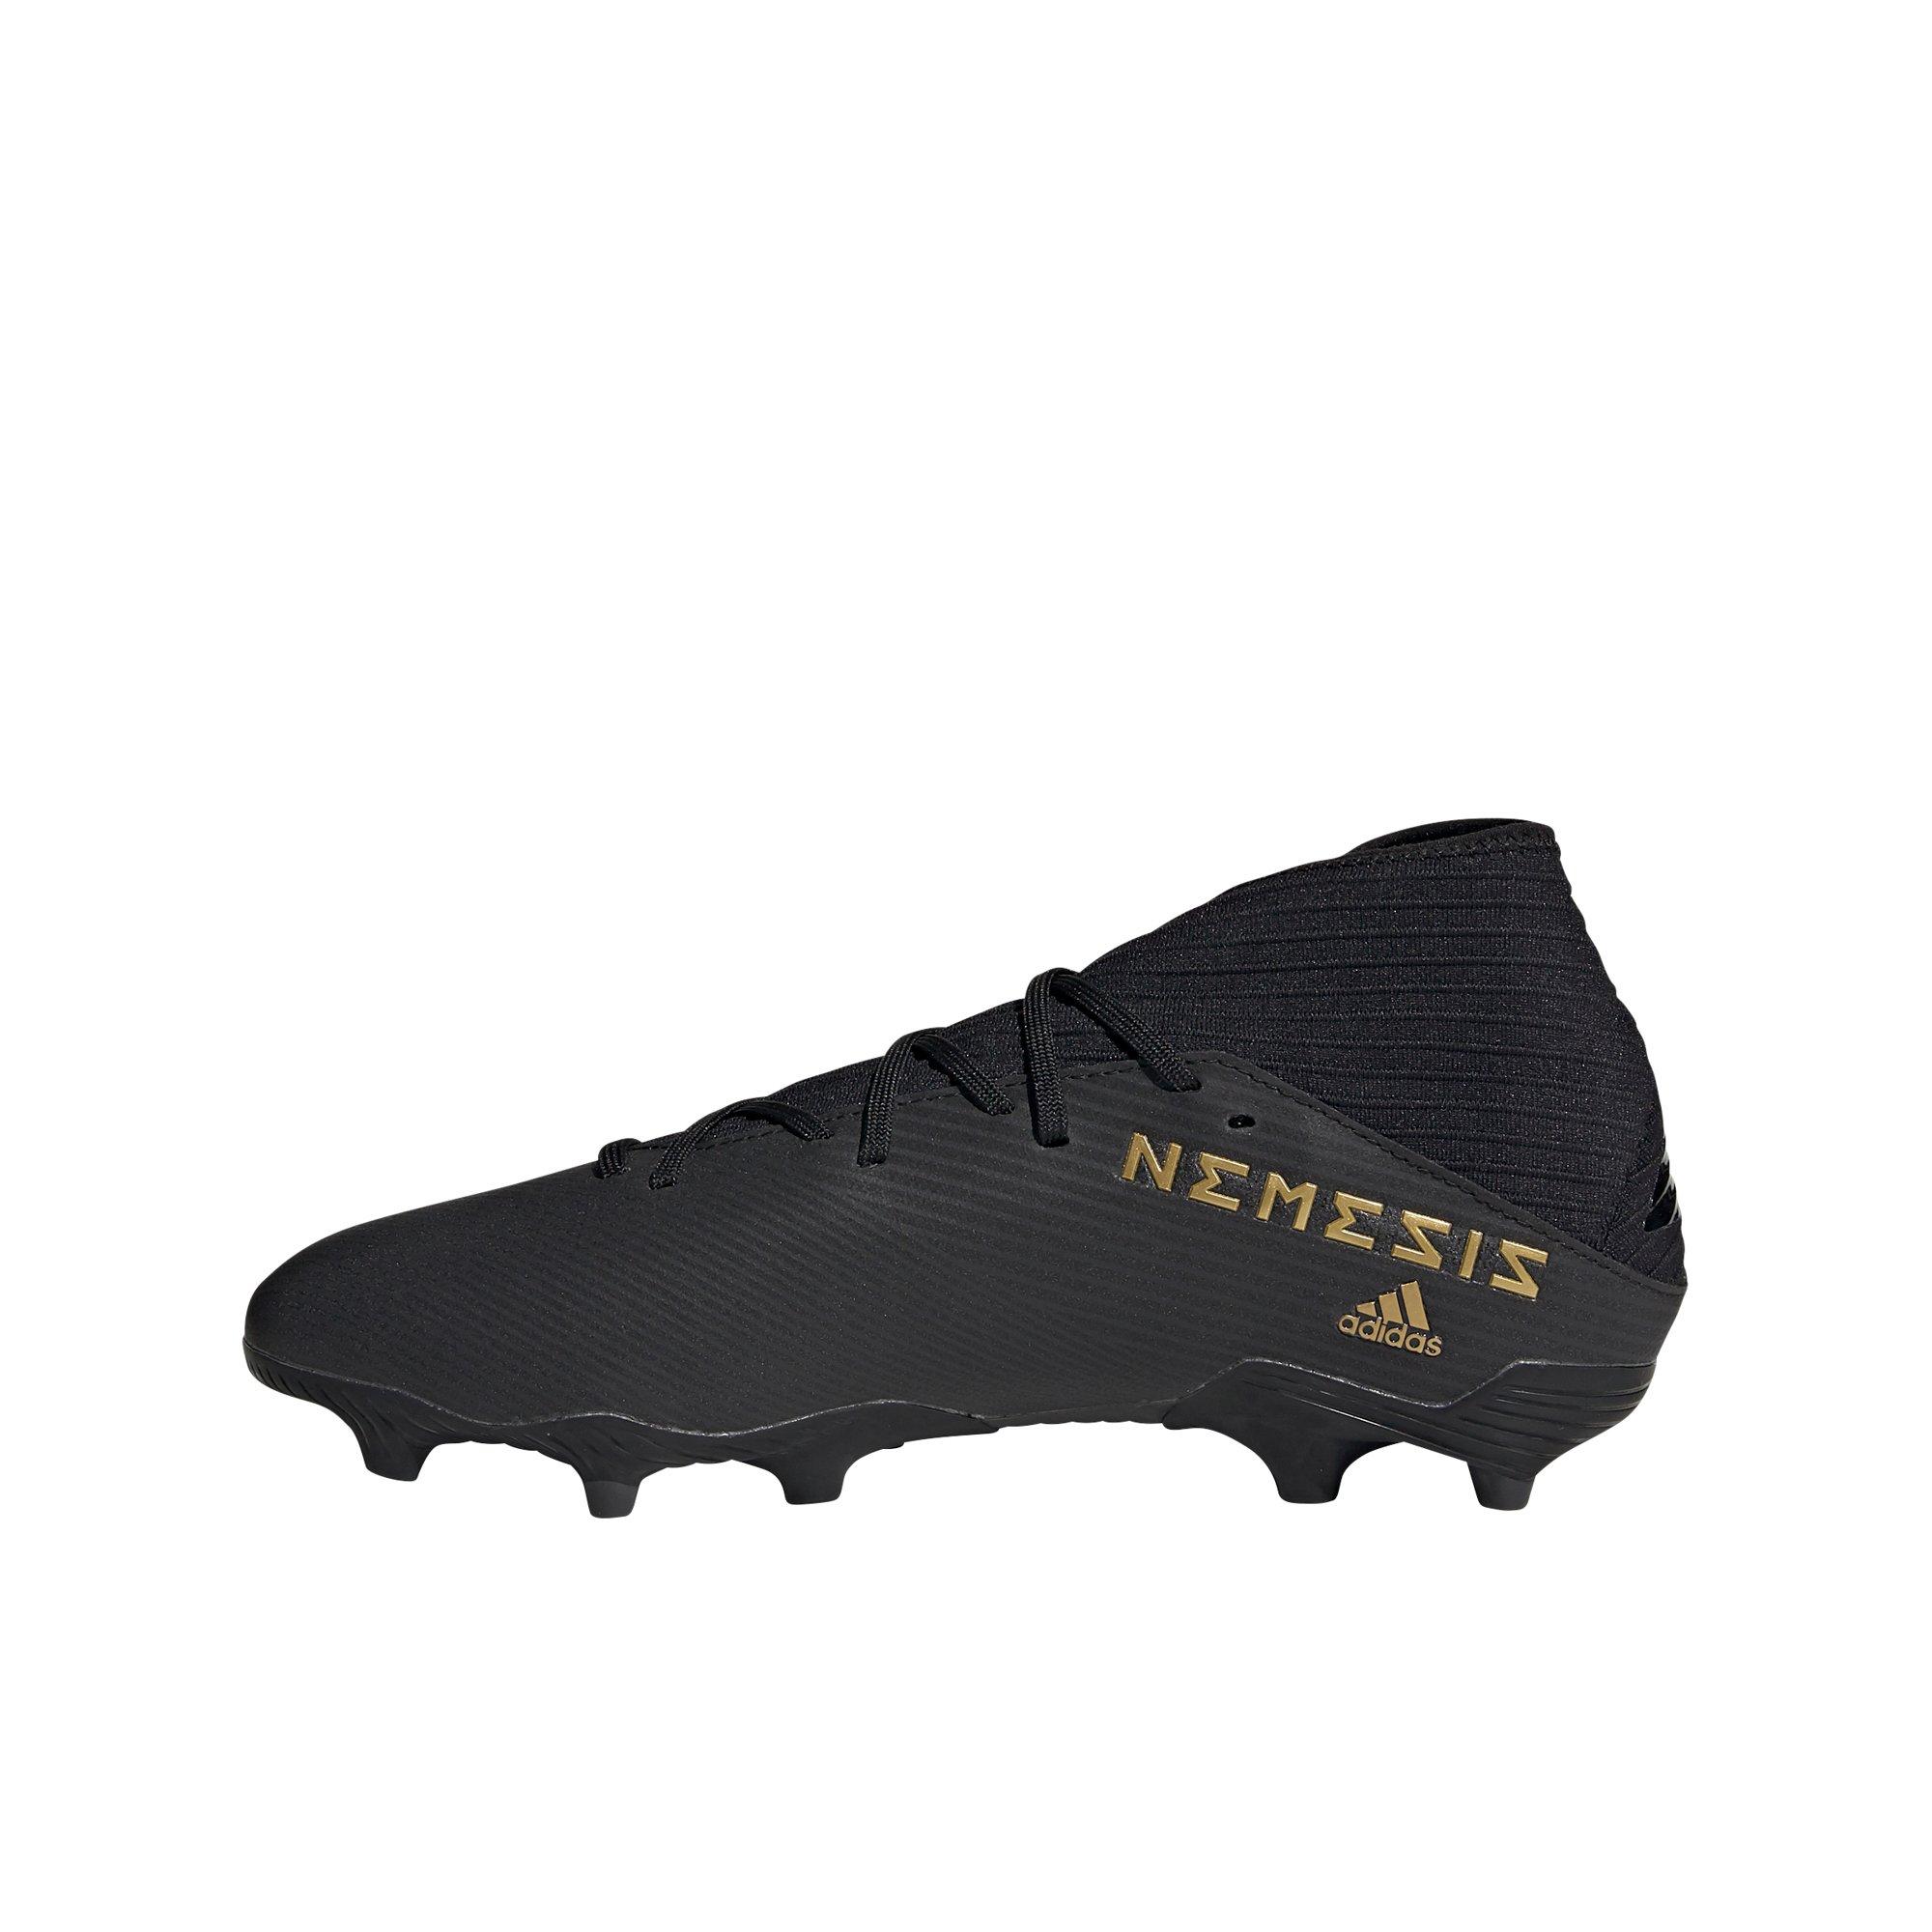 adidas nemeziz soccer shoes